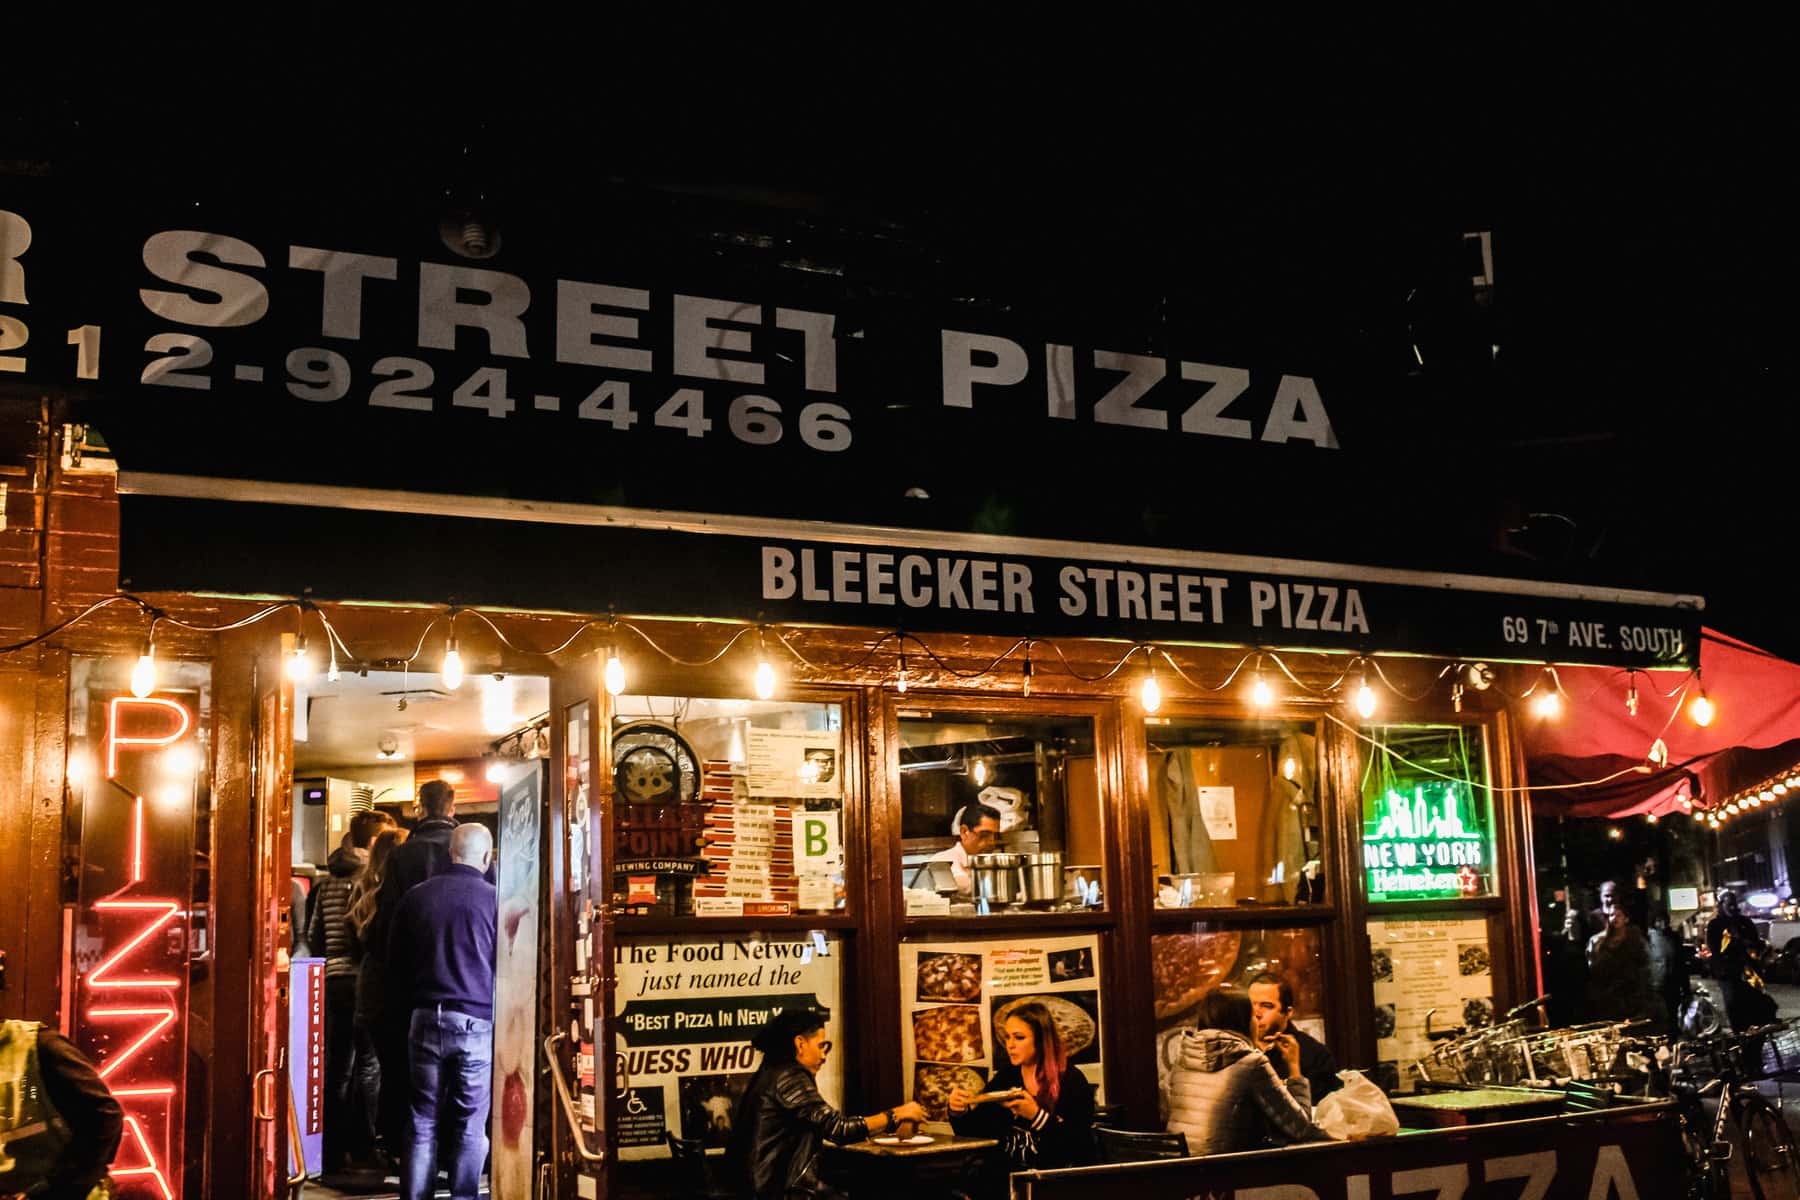 John's of Bleecker street pizza